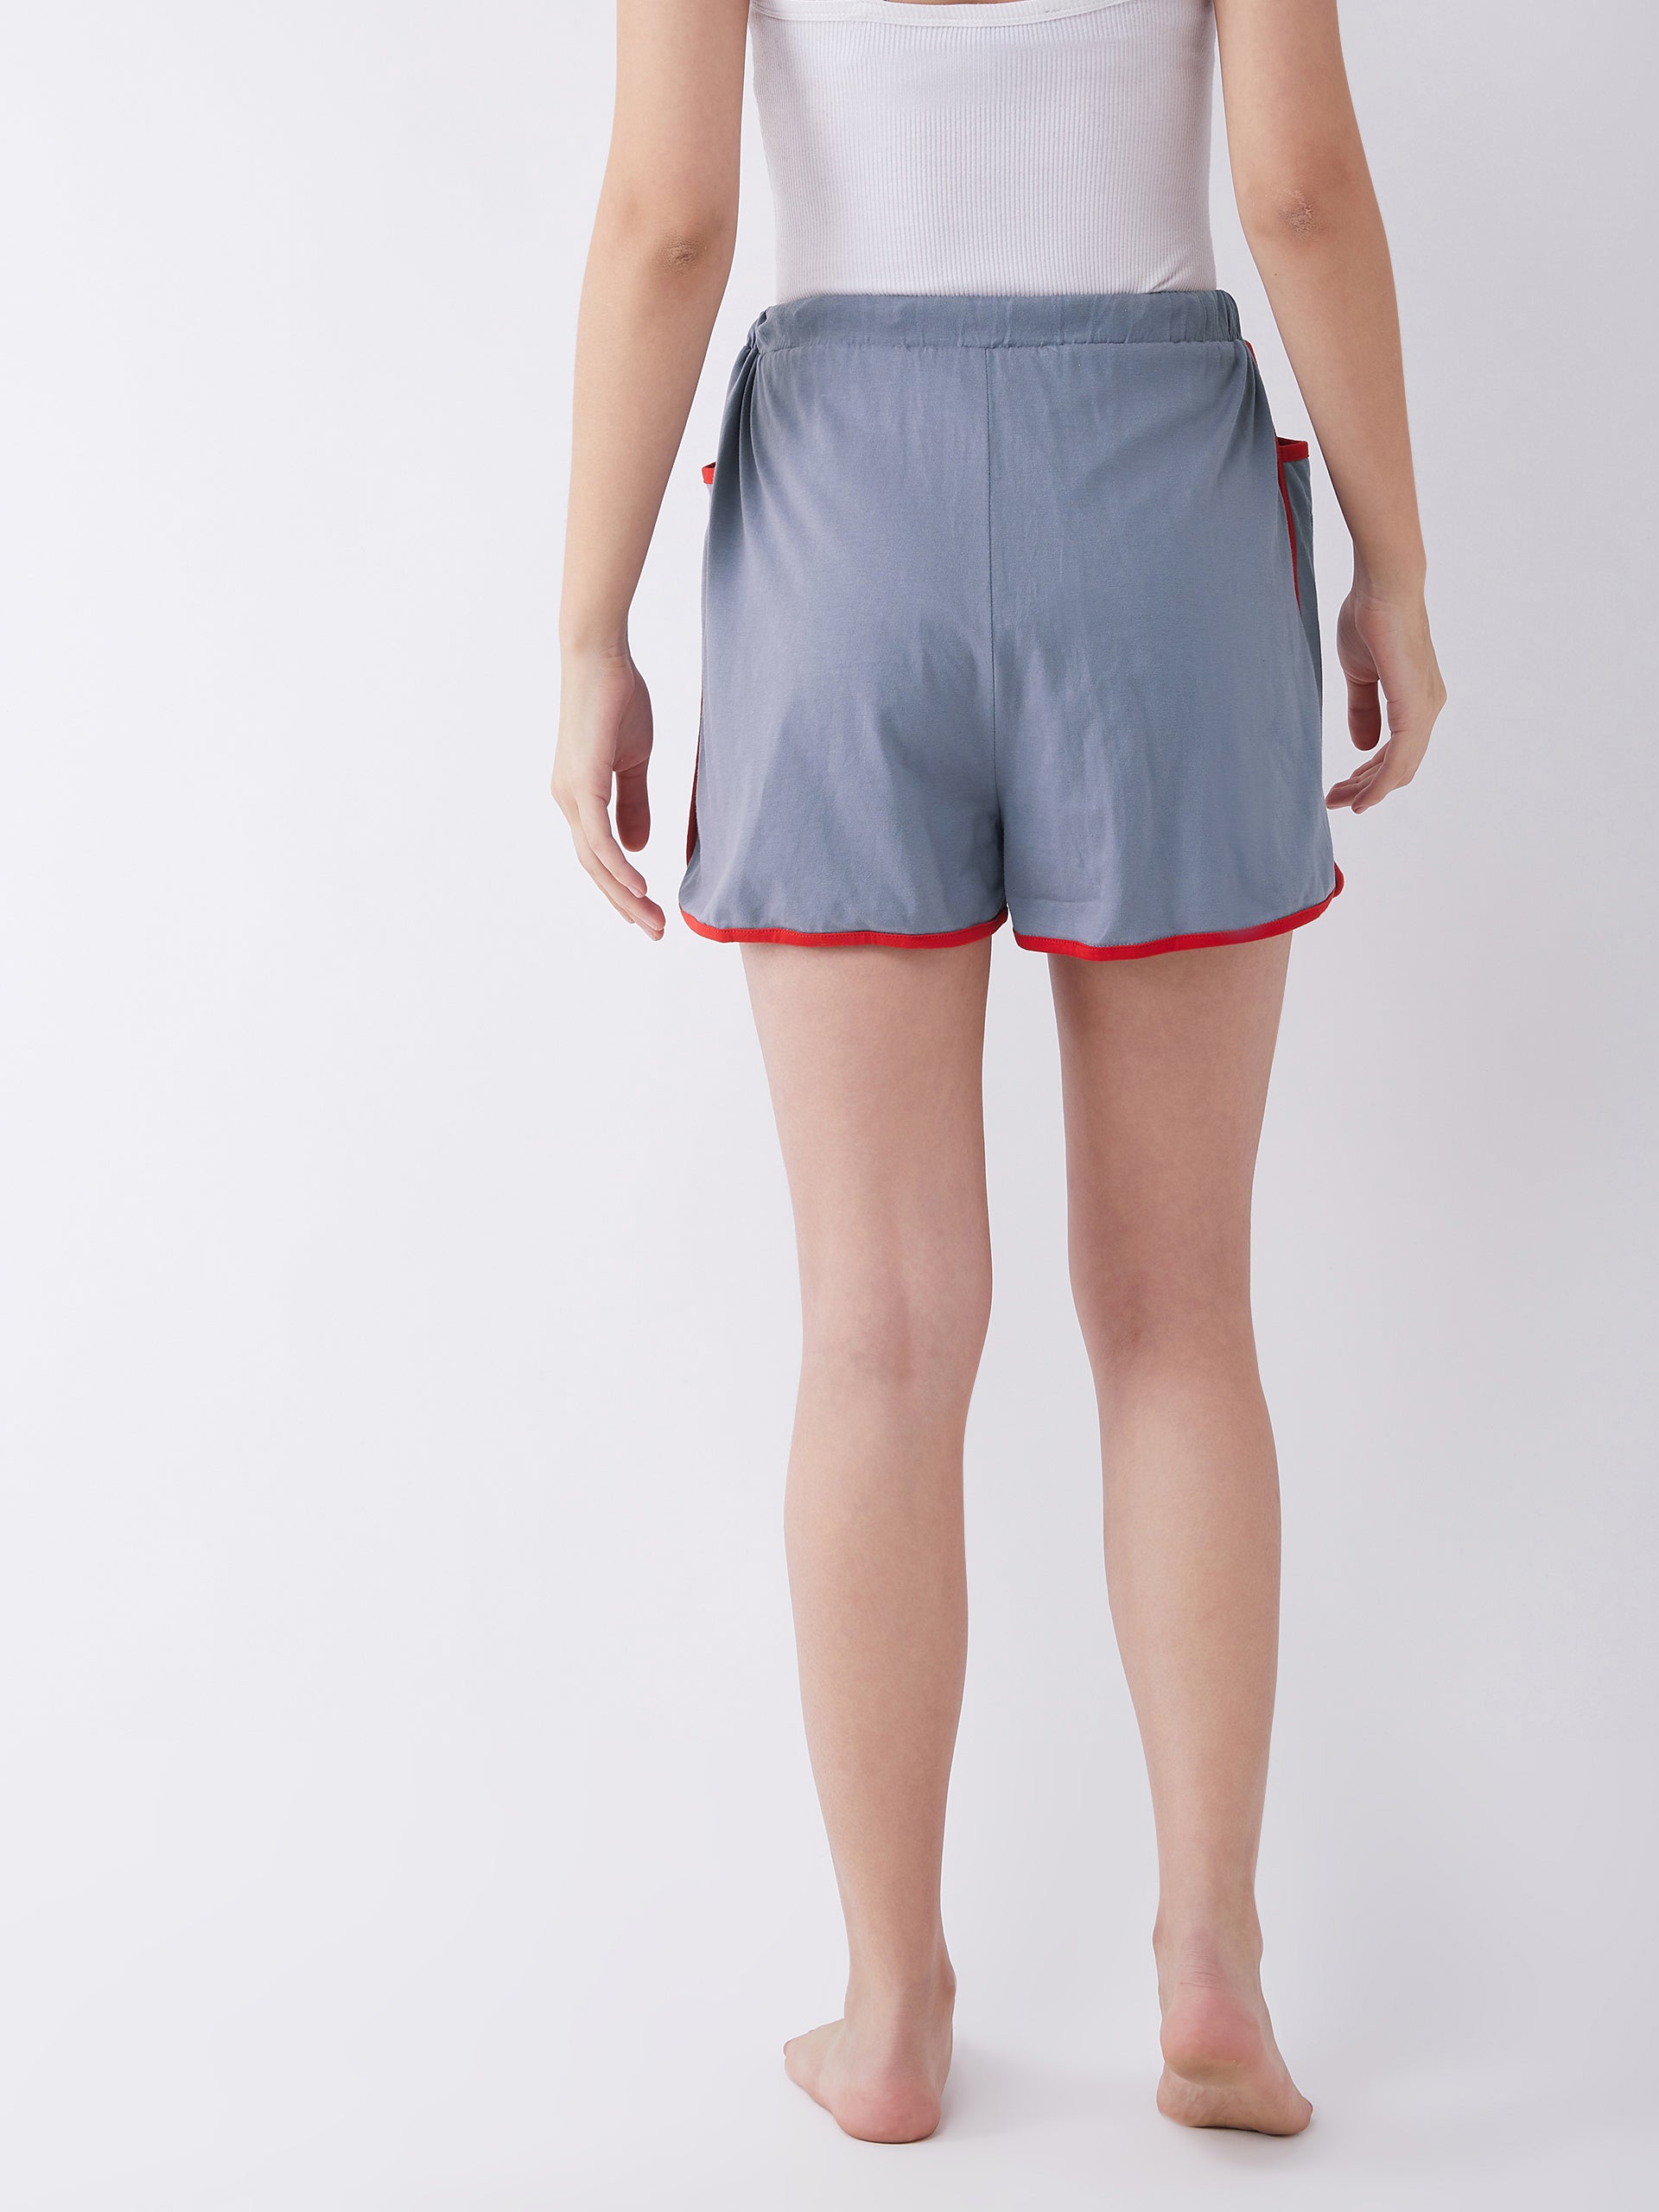 Women's Gray Solid Regular length Shorts